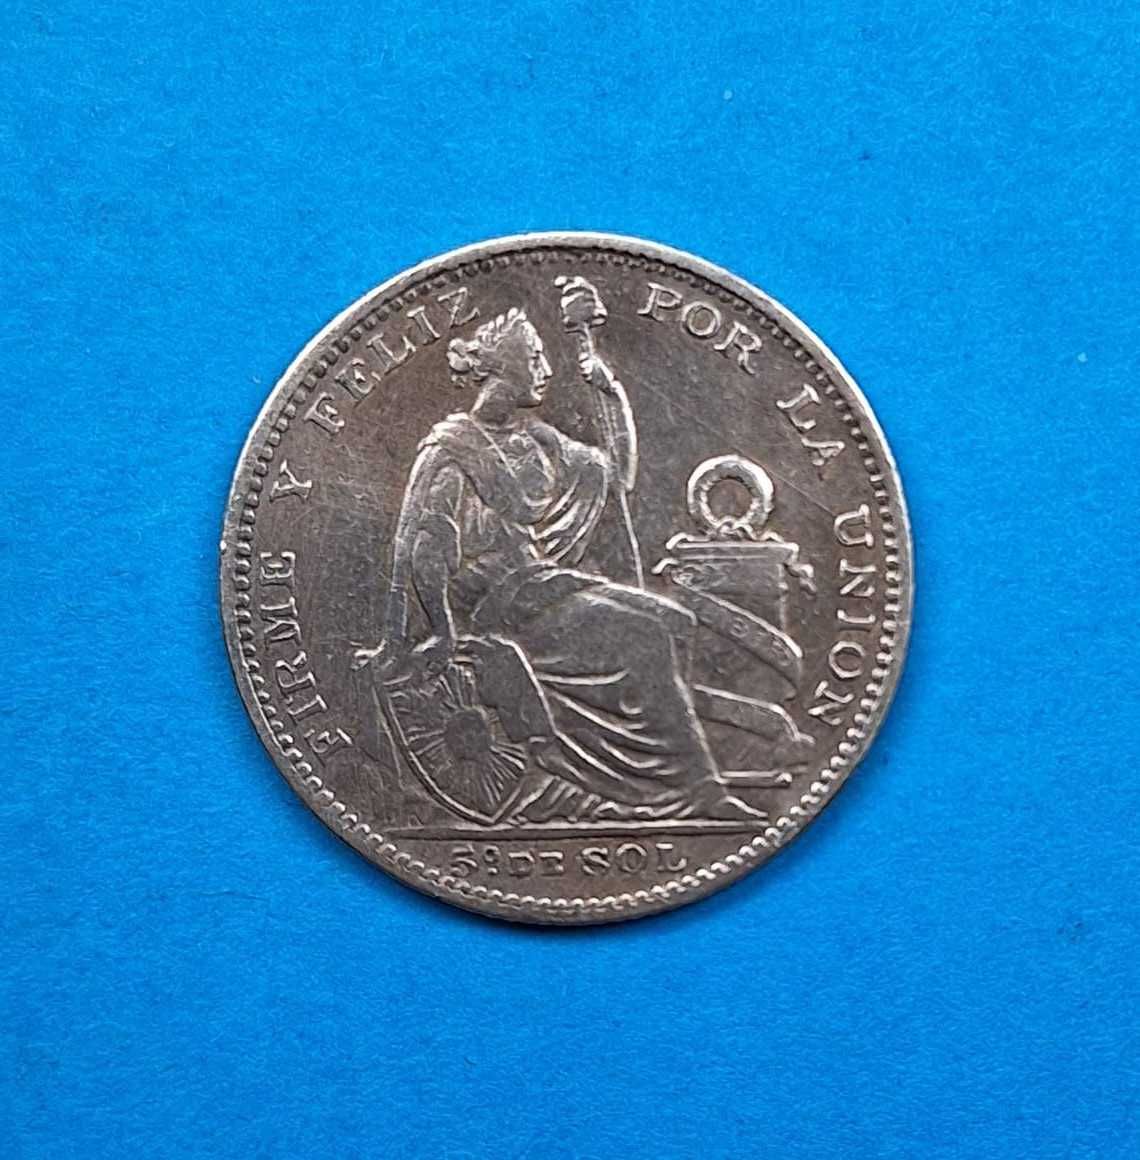 Peru 1/5 sola rok 1899, bardzo dobry stan, srebro 0,900